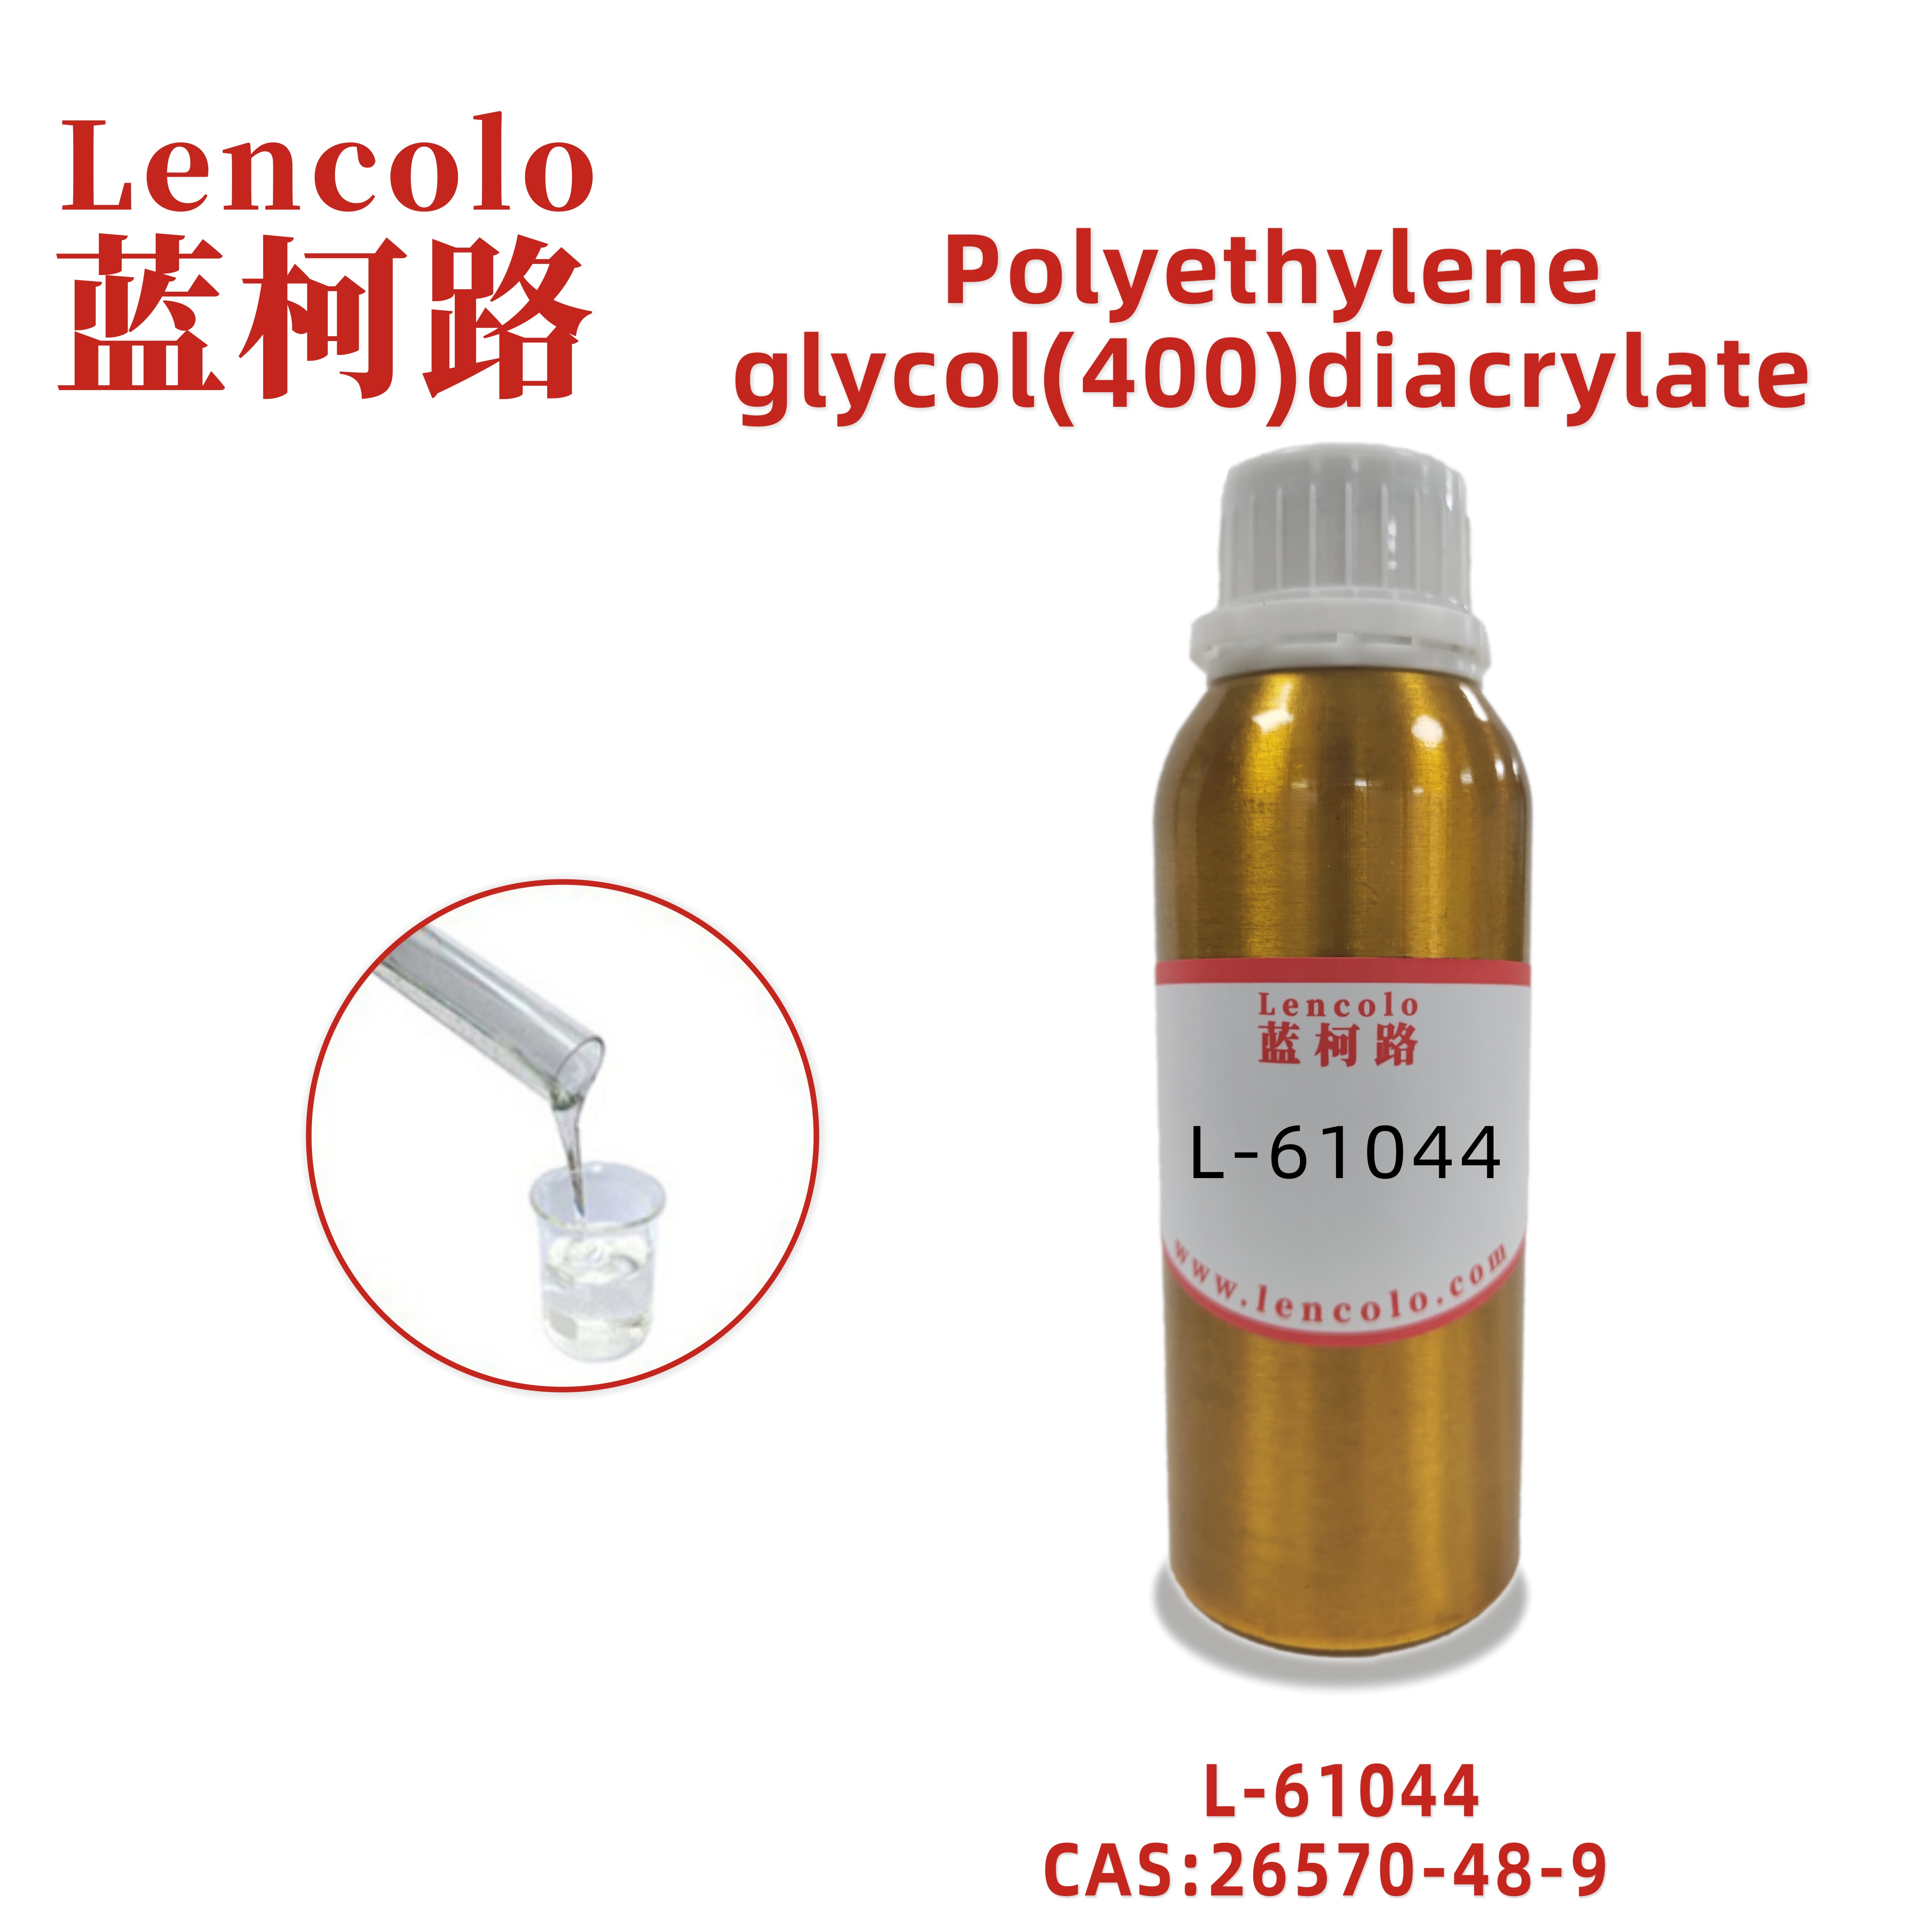 L-61044 (PEG(400)DA) Polyethylene glycol(400)diacrylate